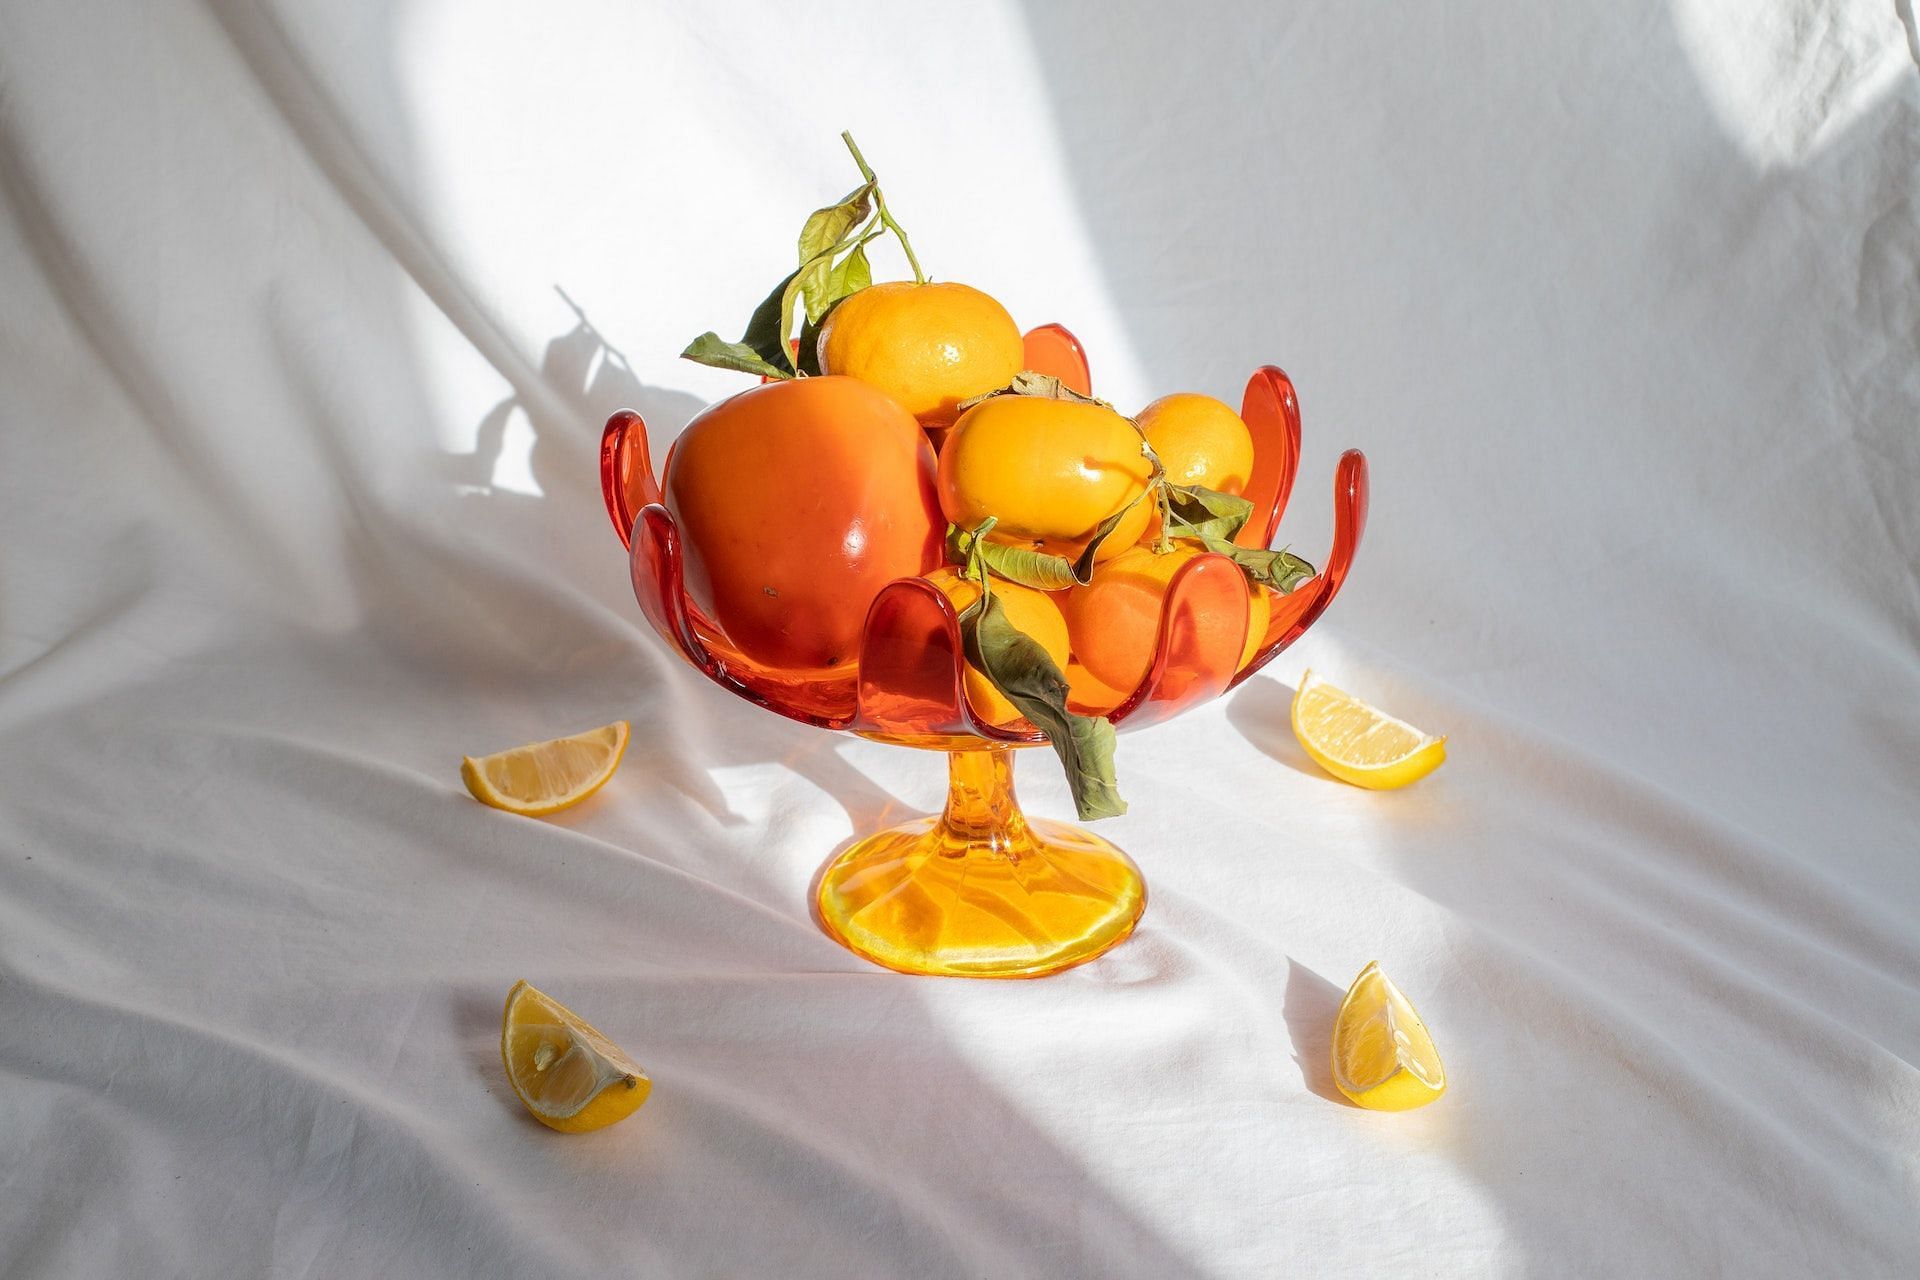 Persimmons contain important antioxidants. (Photo via Pexels/Jill Burrow)